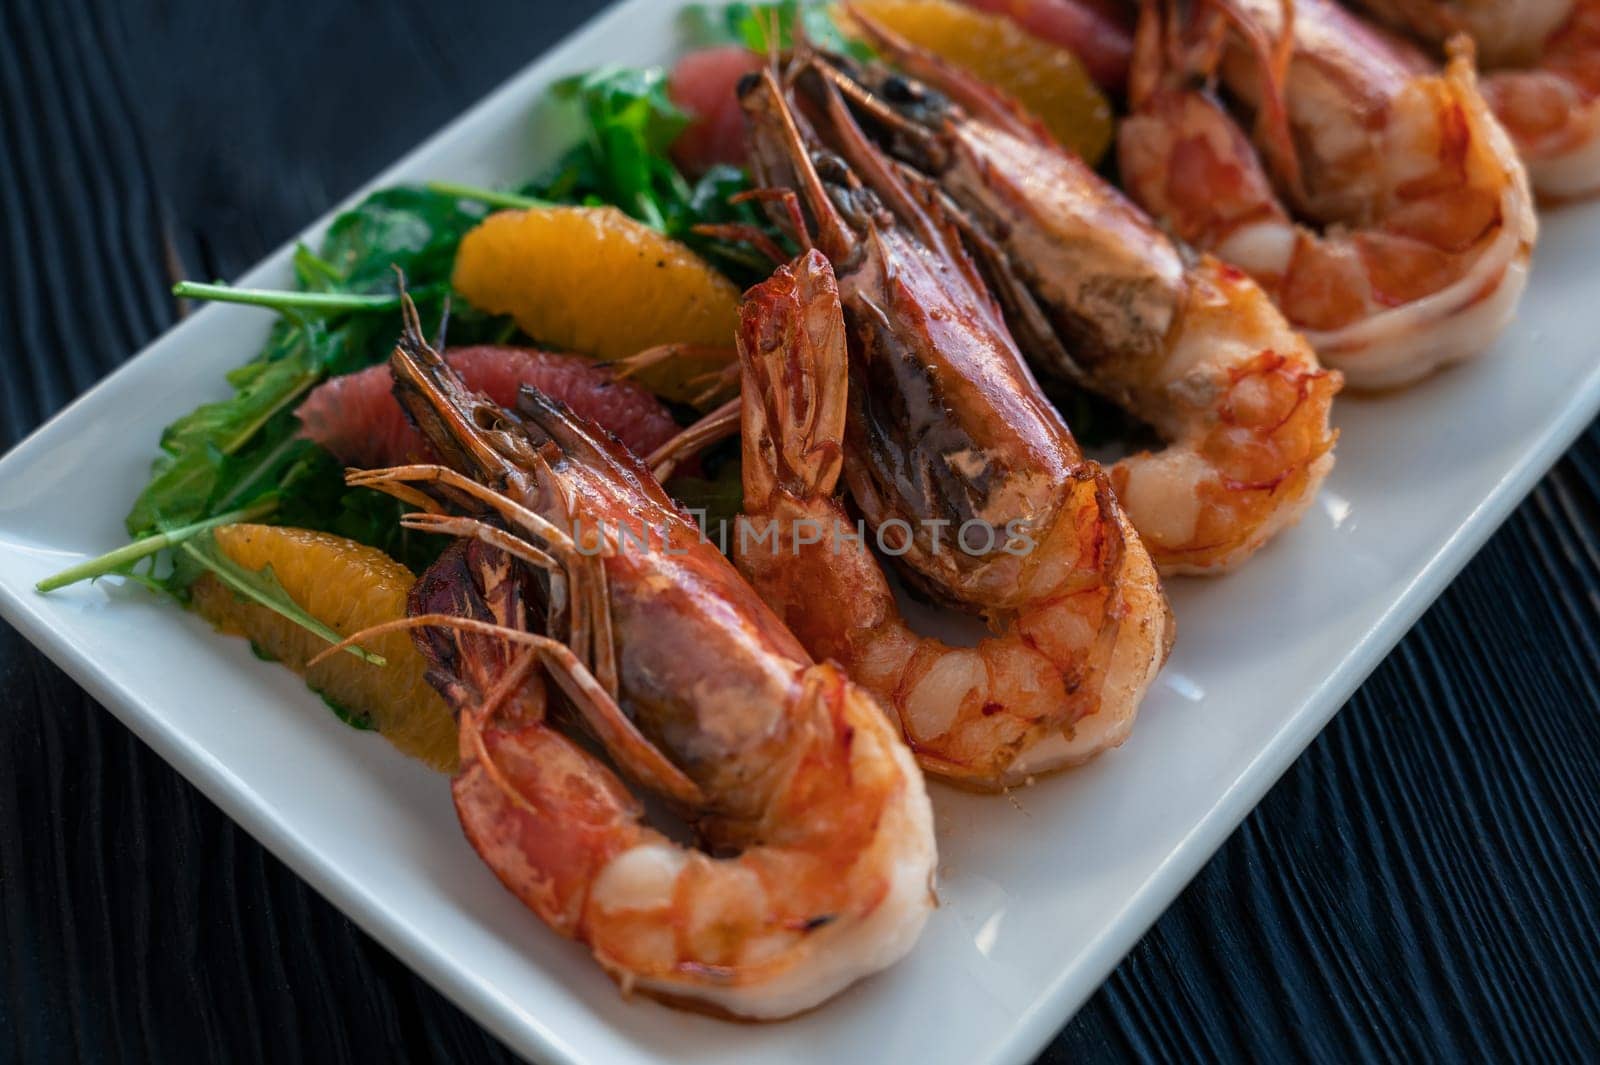 Grilled tiger prawns or shrimps with orange grapefruit and greens on a plate